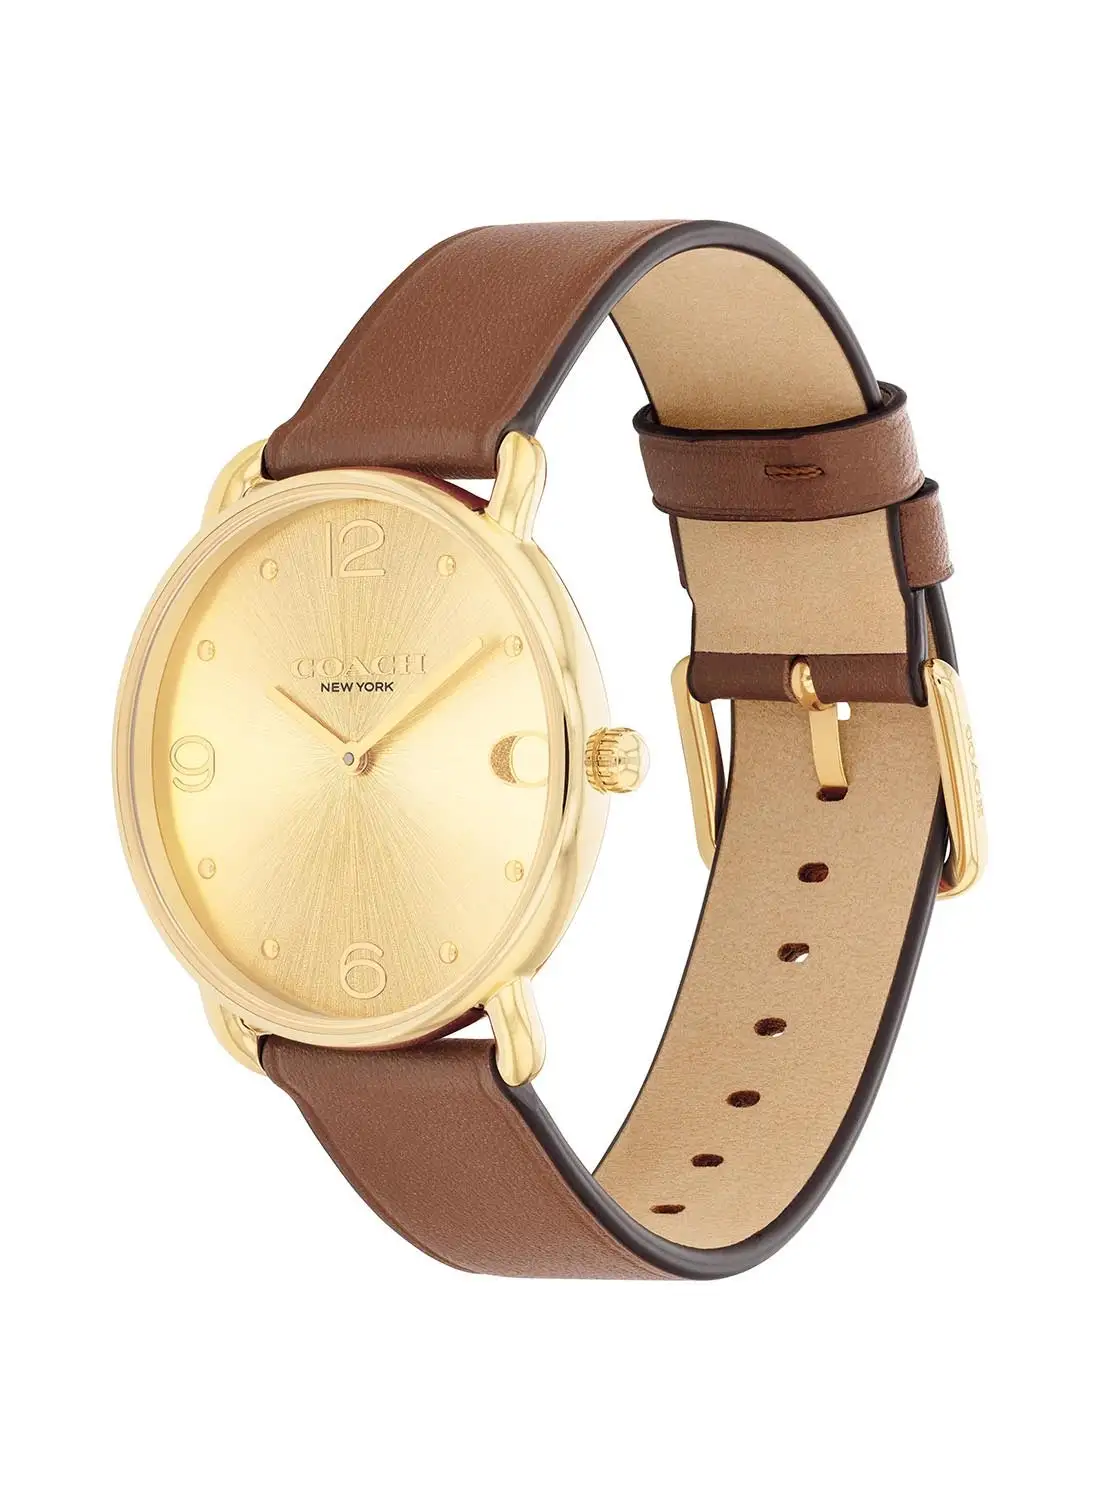 COACH Women's Analog Round Shape Leather Wrist Watch 14504201 - 36 Mm